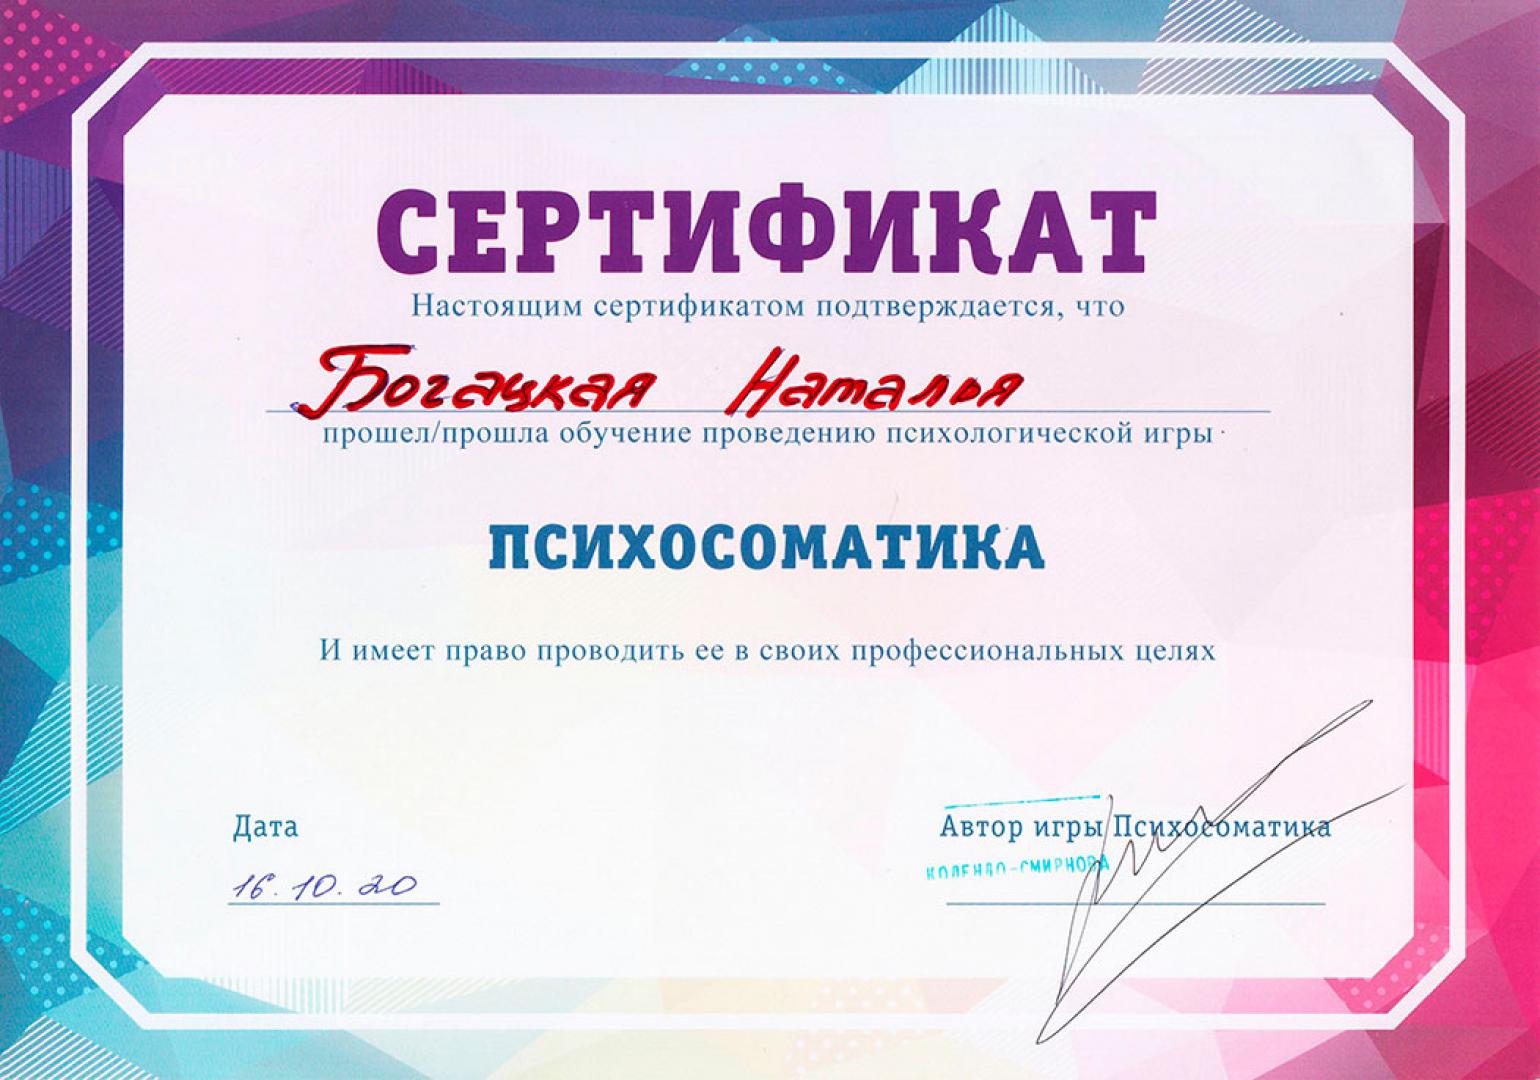 Наталья Богацкая: Сертификат “Психосоматика”